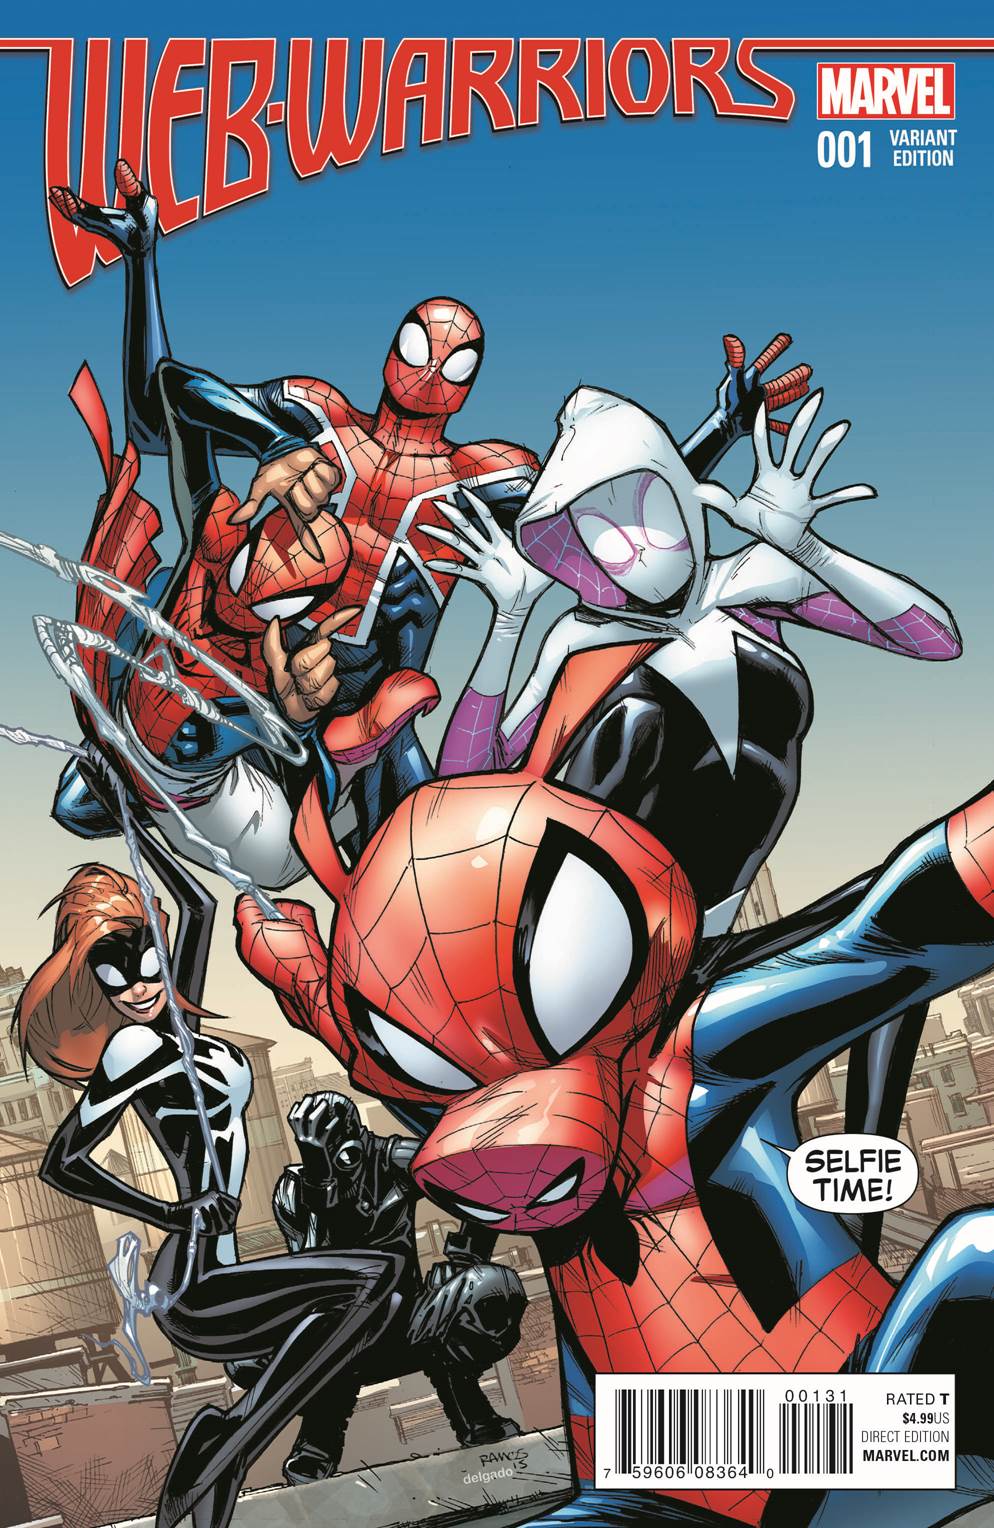 Ultimate Spider-Man: Web Warriors Season 3 Episode 3 Agent